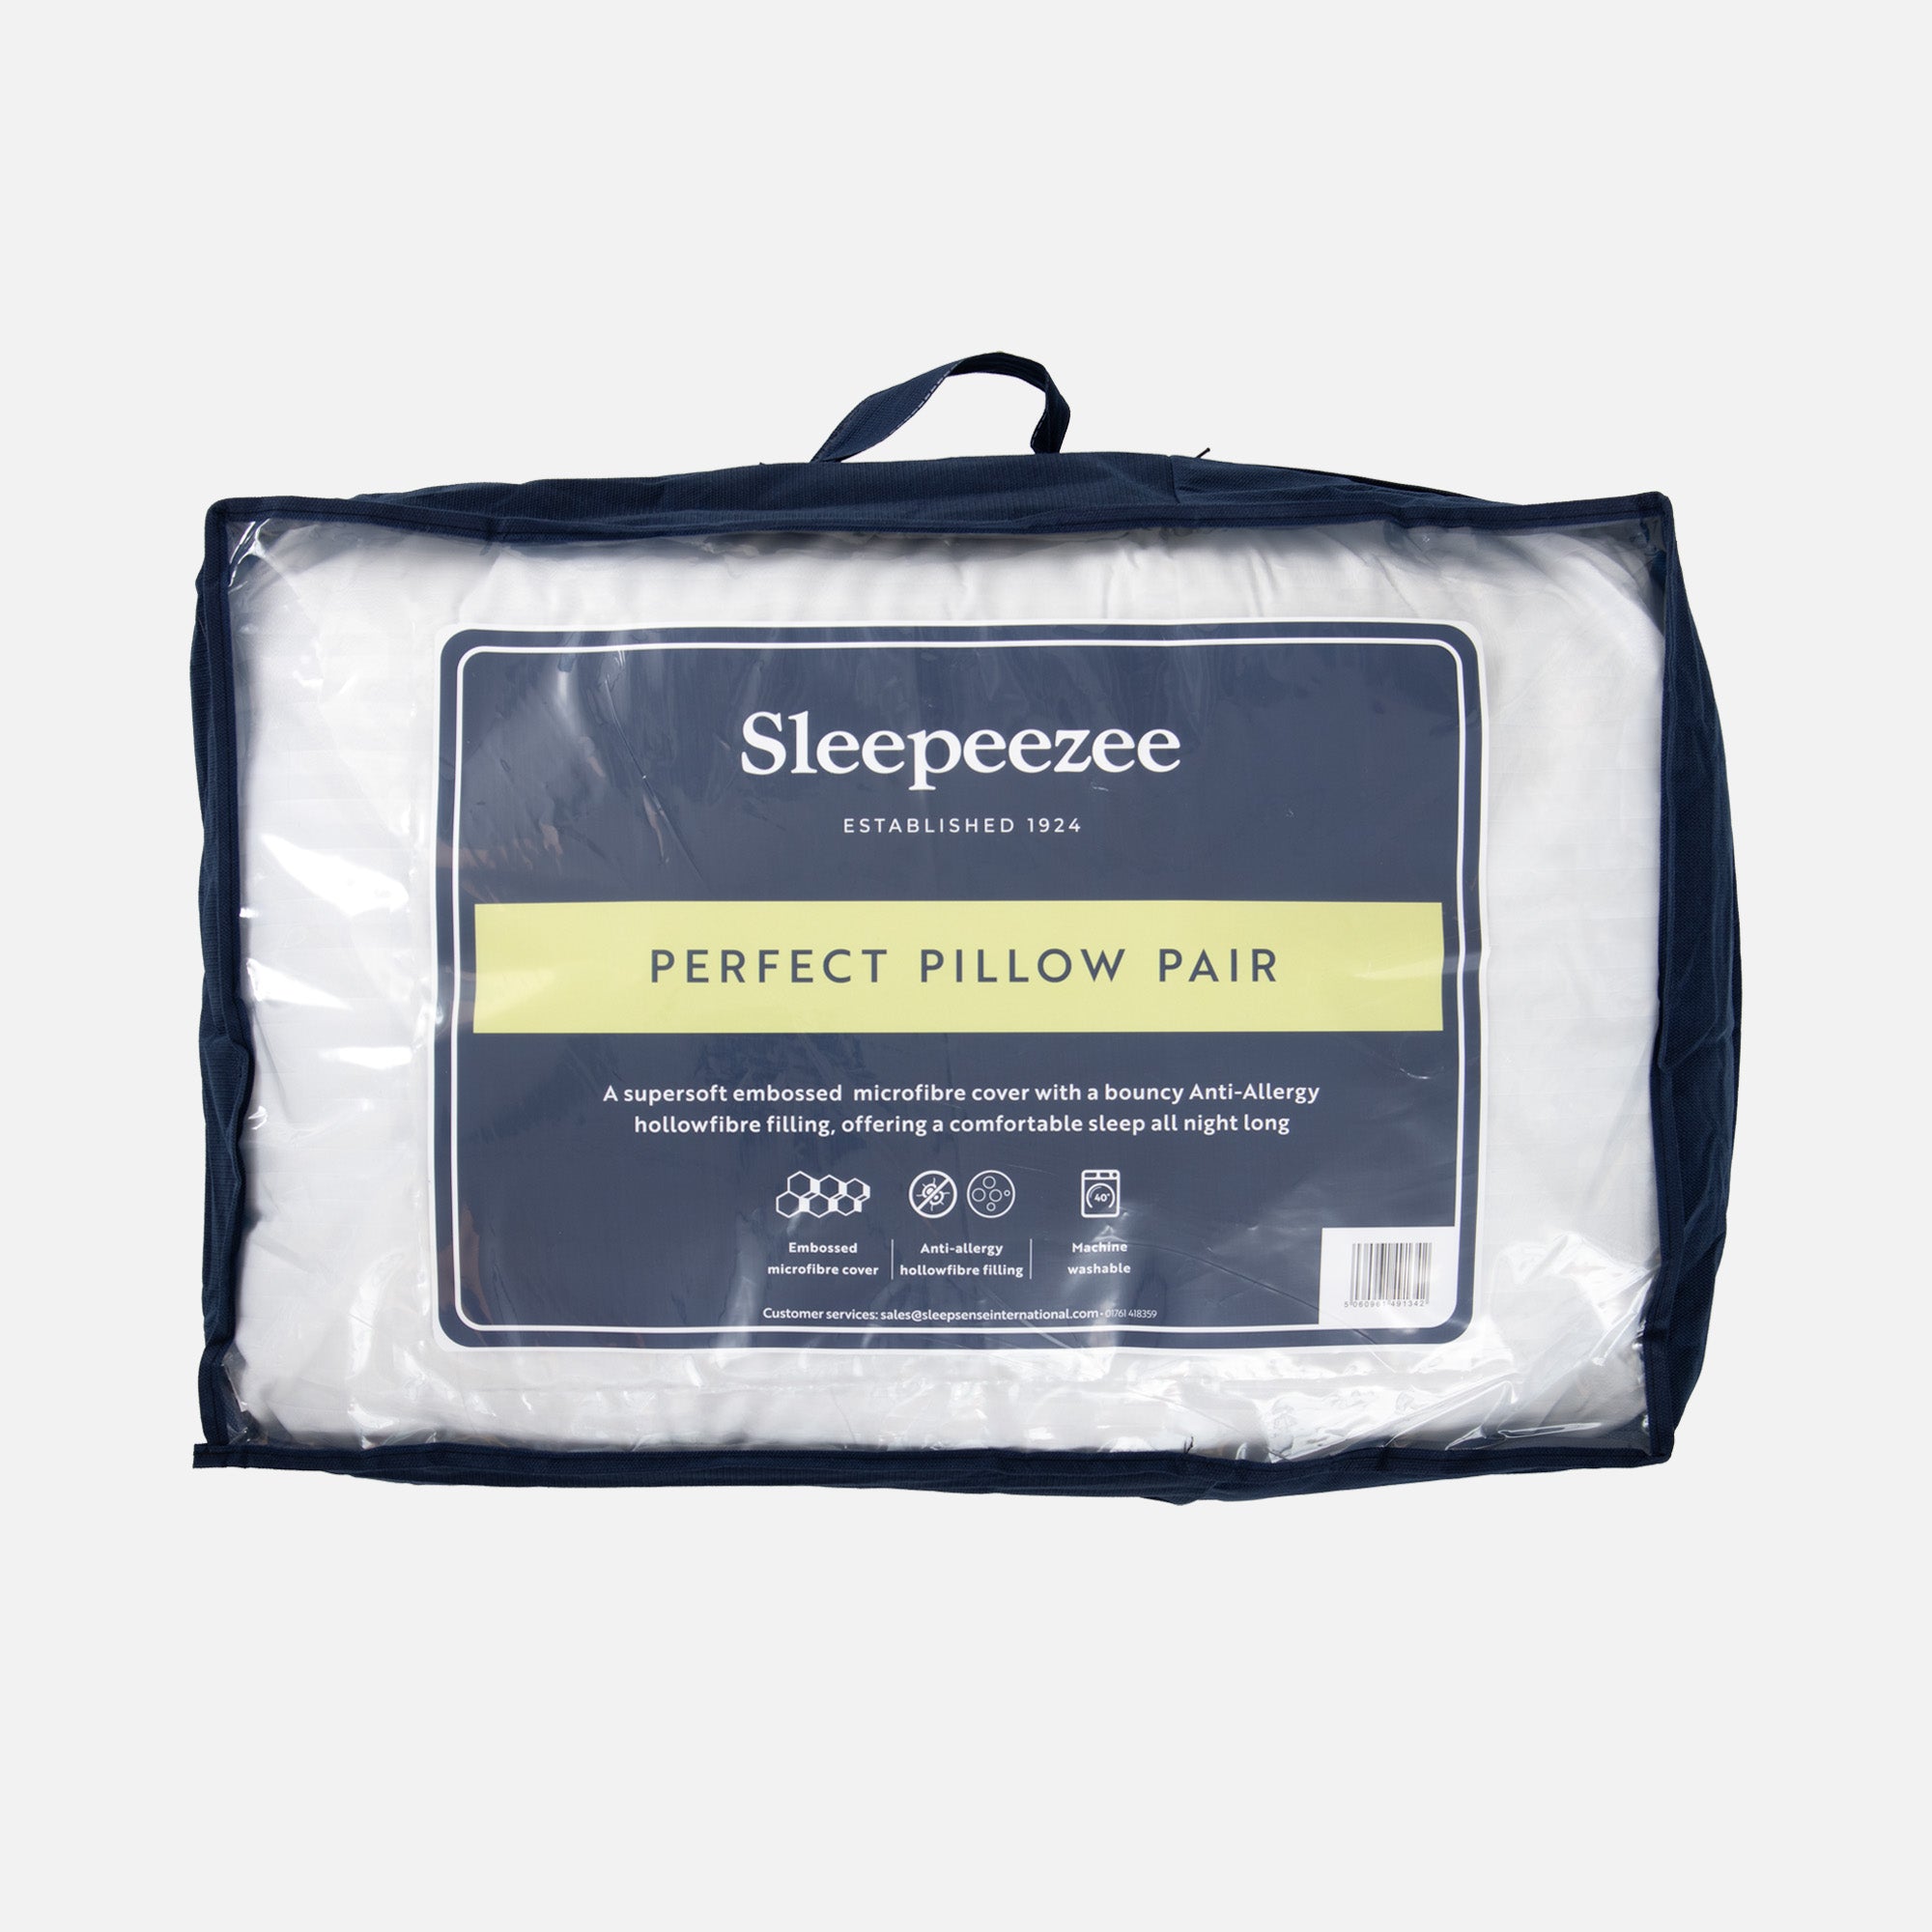 Pillows - Sleepeezee Perfect Pillow Pair